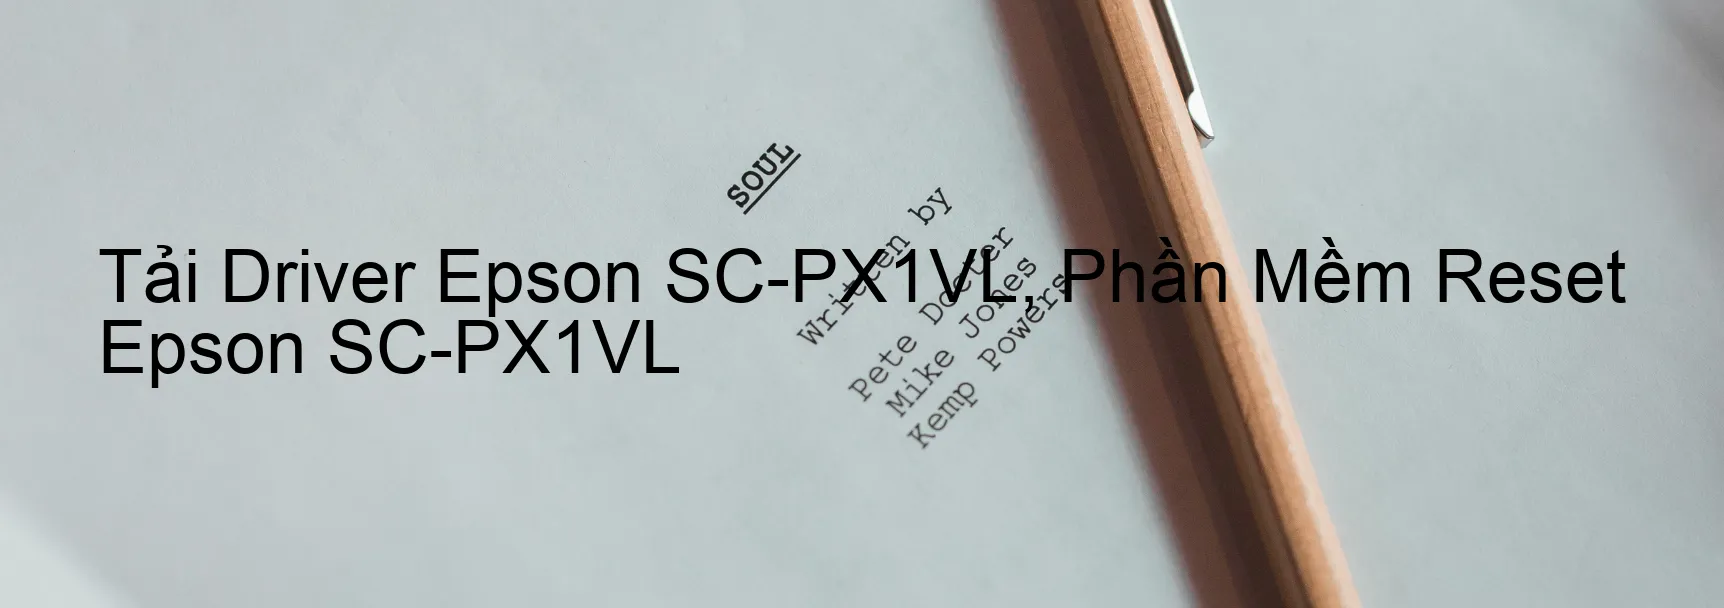 Driver Epson SC-PX1VL, Phần Mềm Reset Epson SC-PX1VL